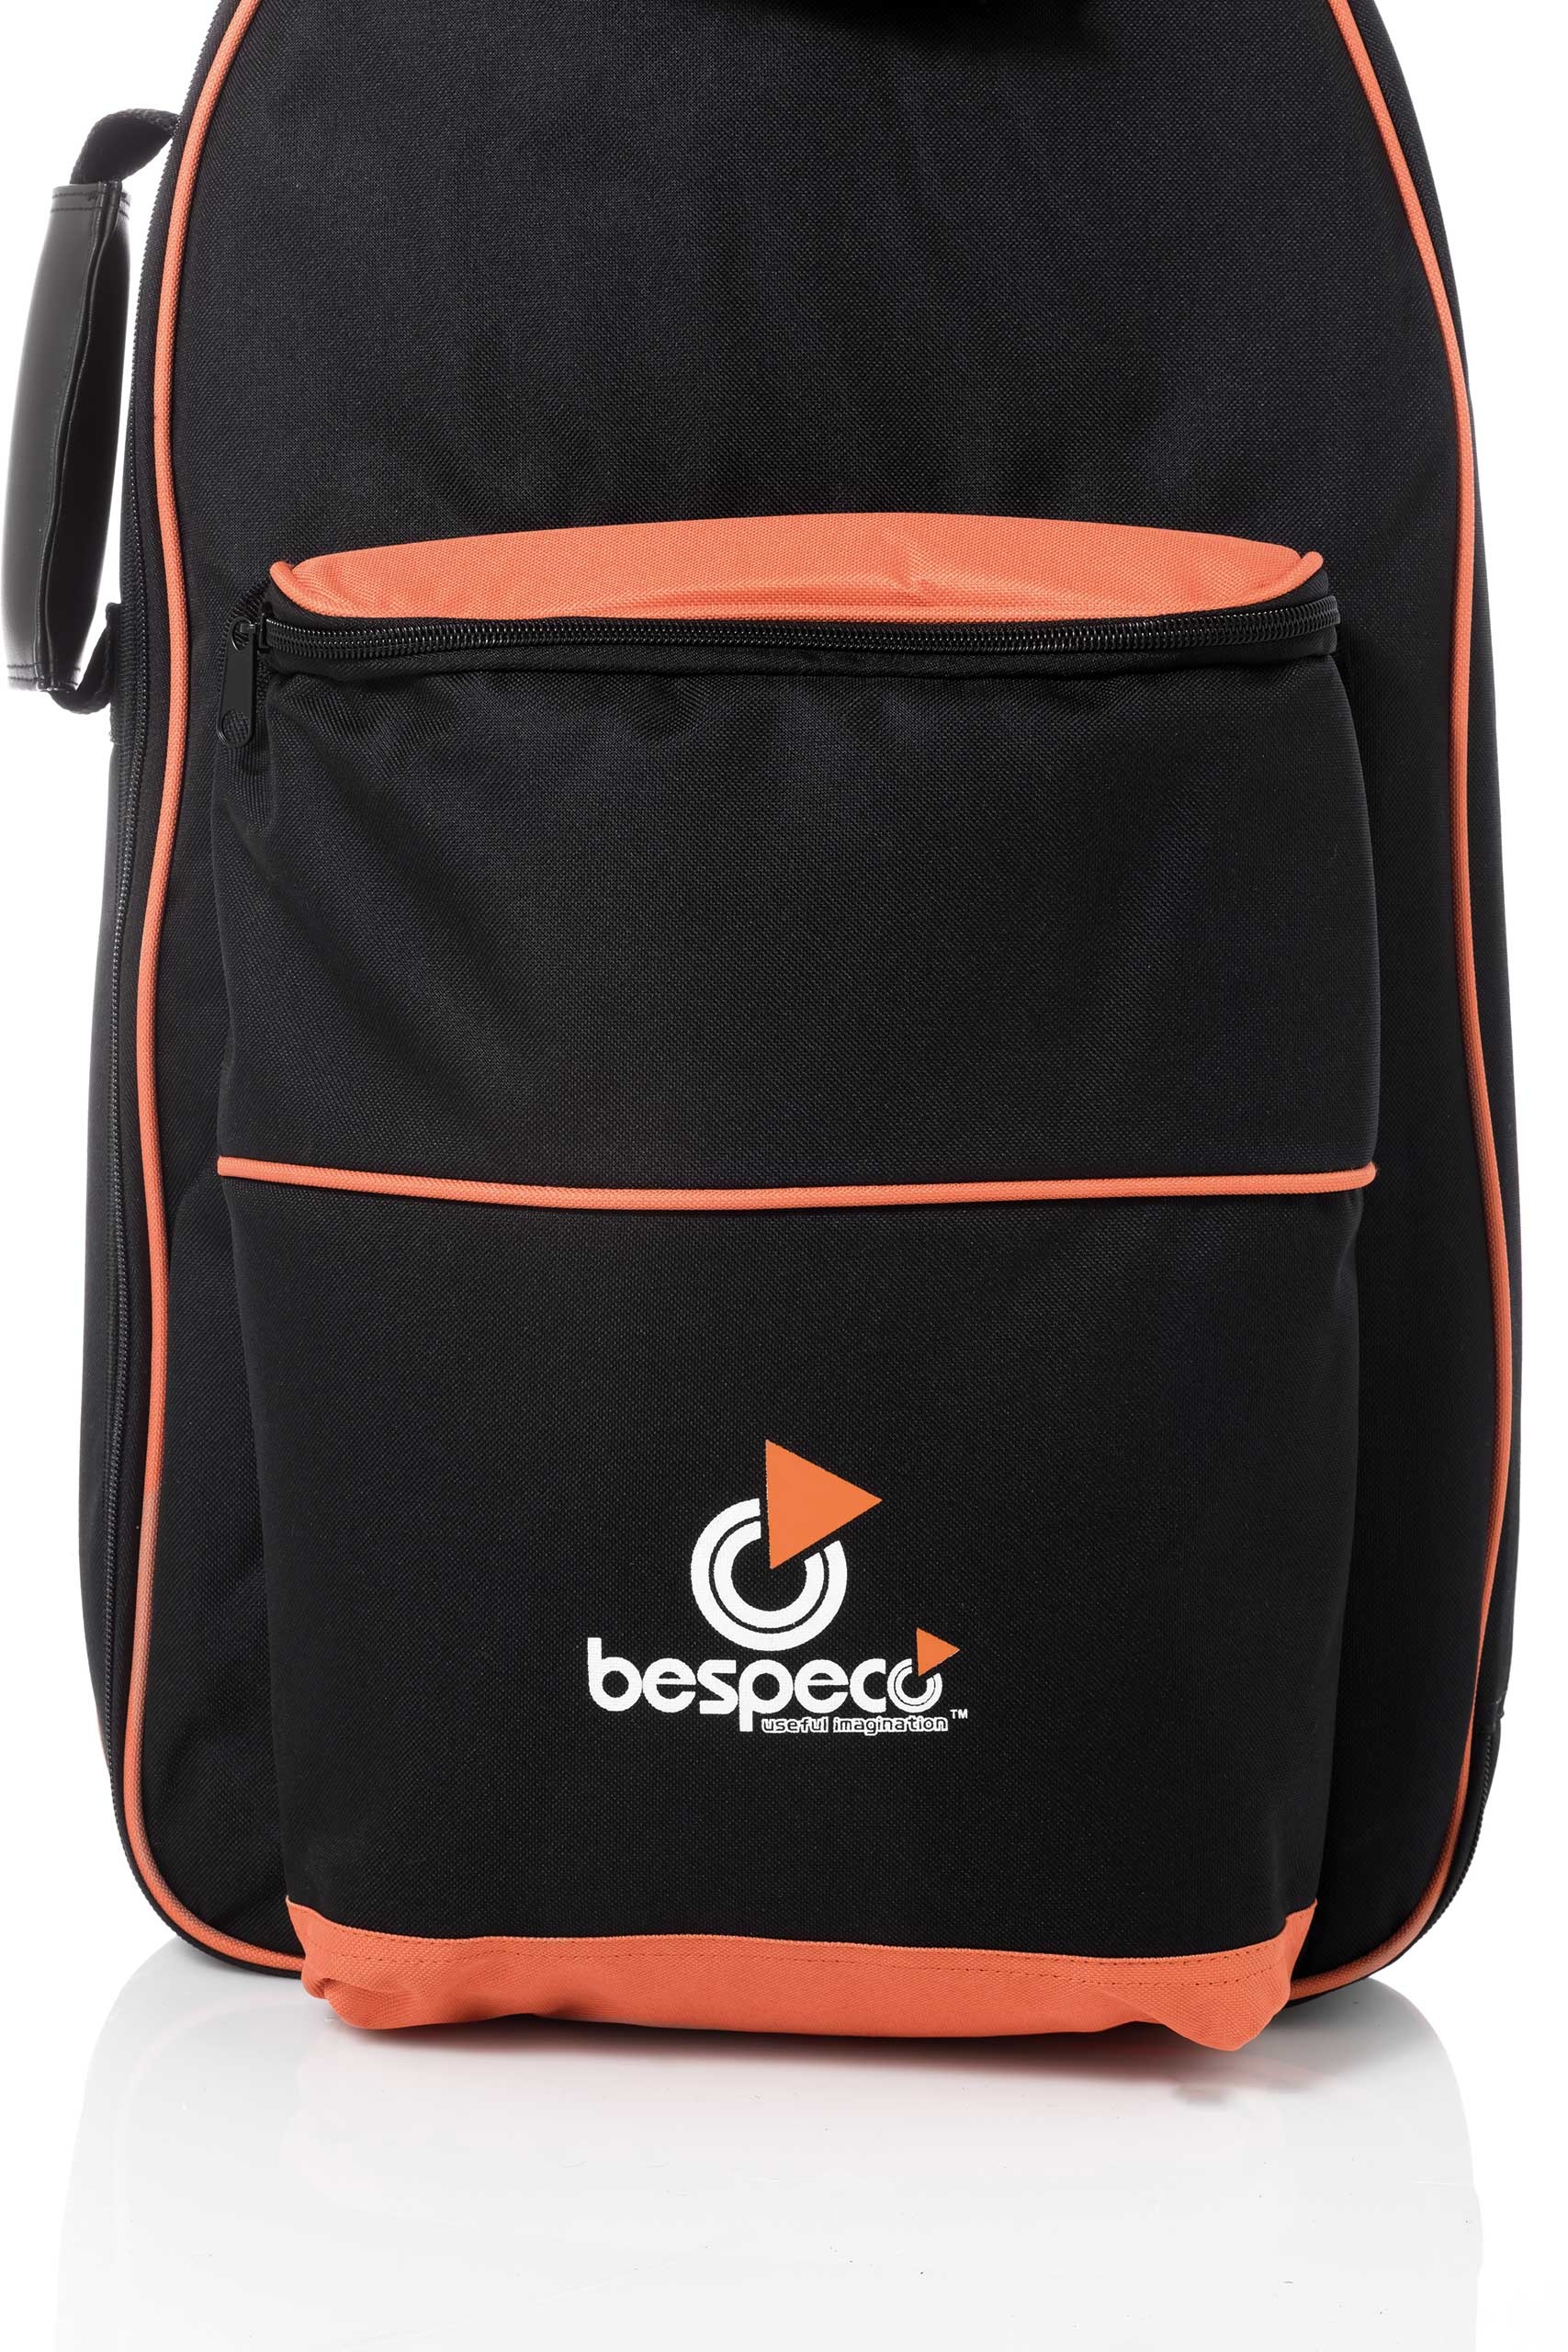 bag430bg-borsa-per-basso-elettrico-rinforzata-nera-arancione